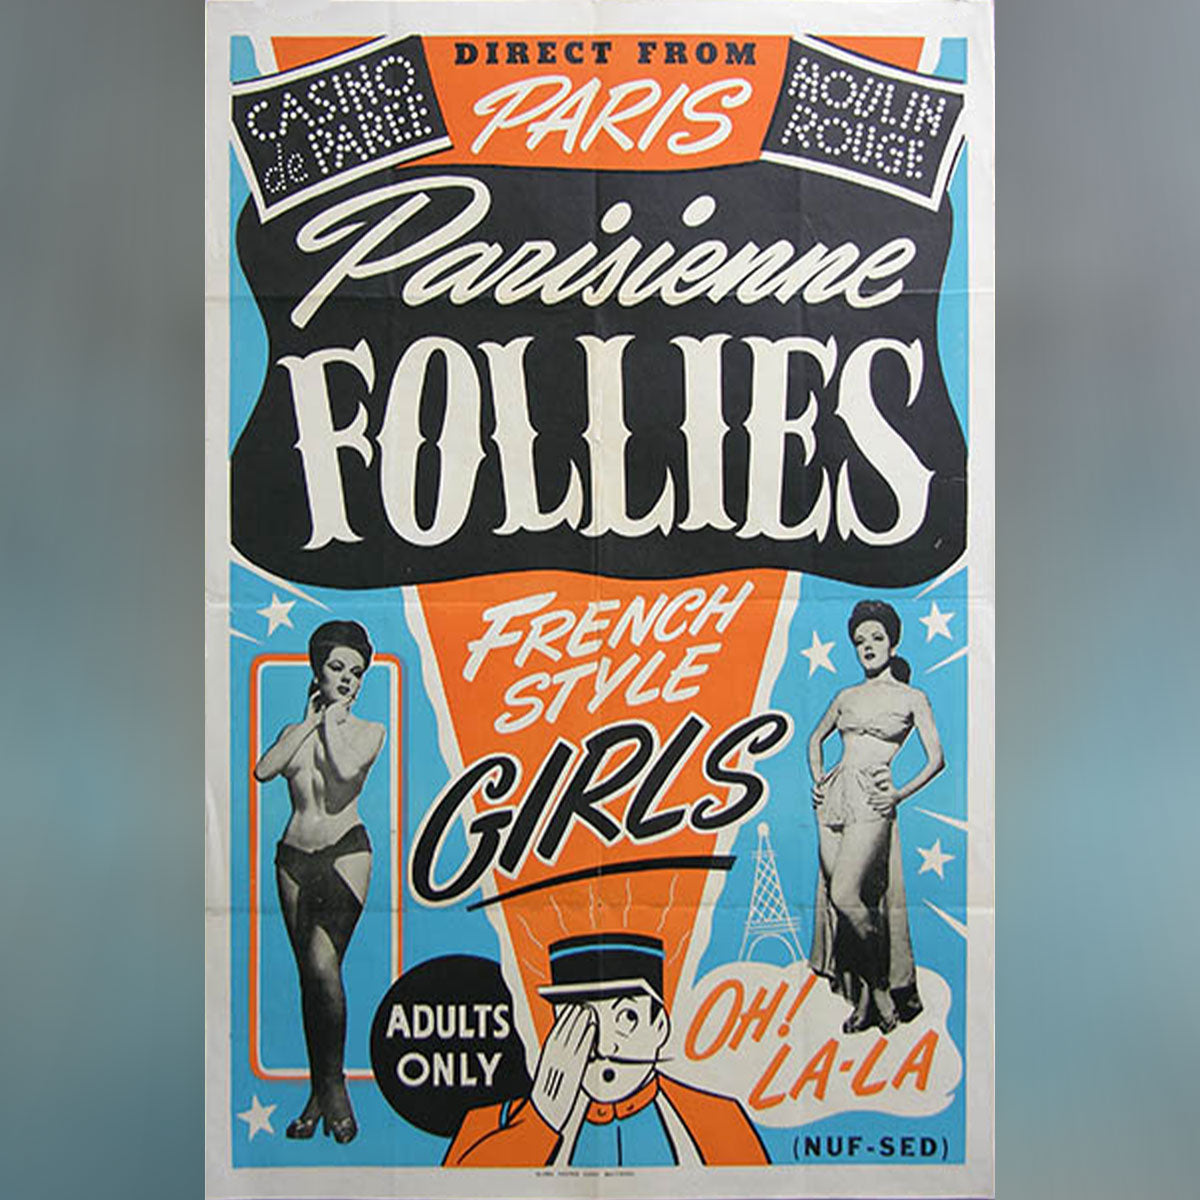 Parisienne Follies (1940's)